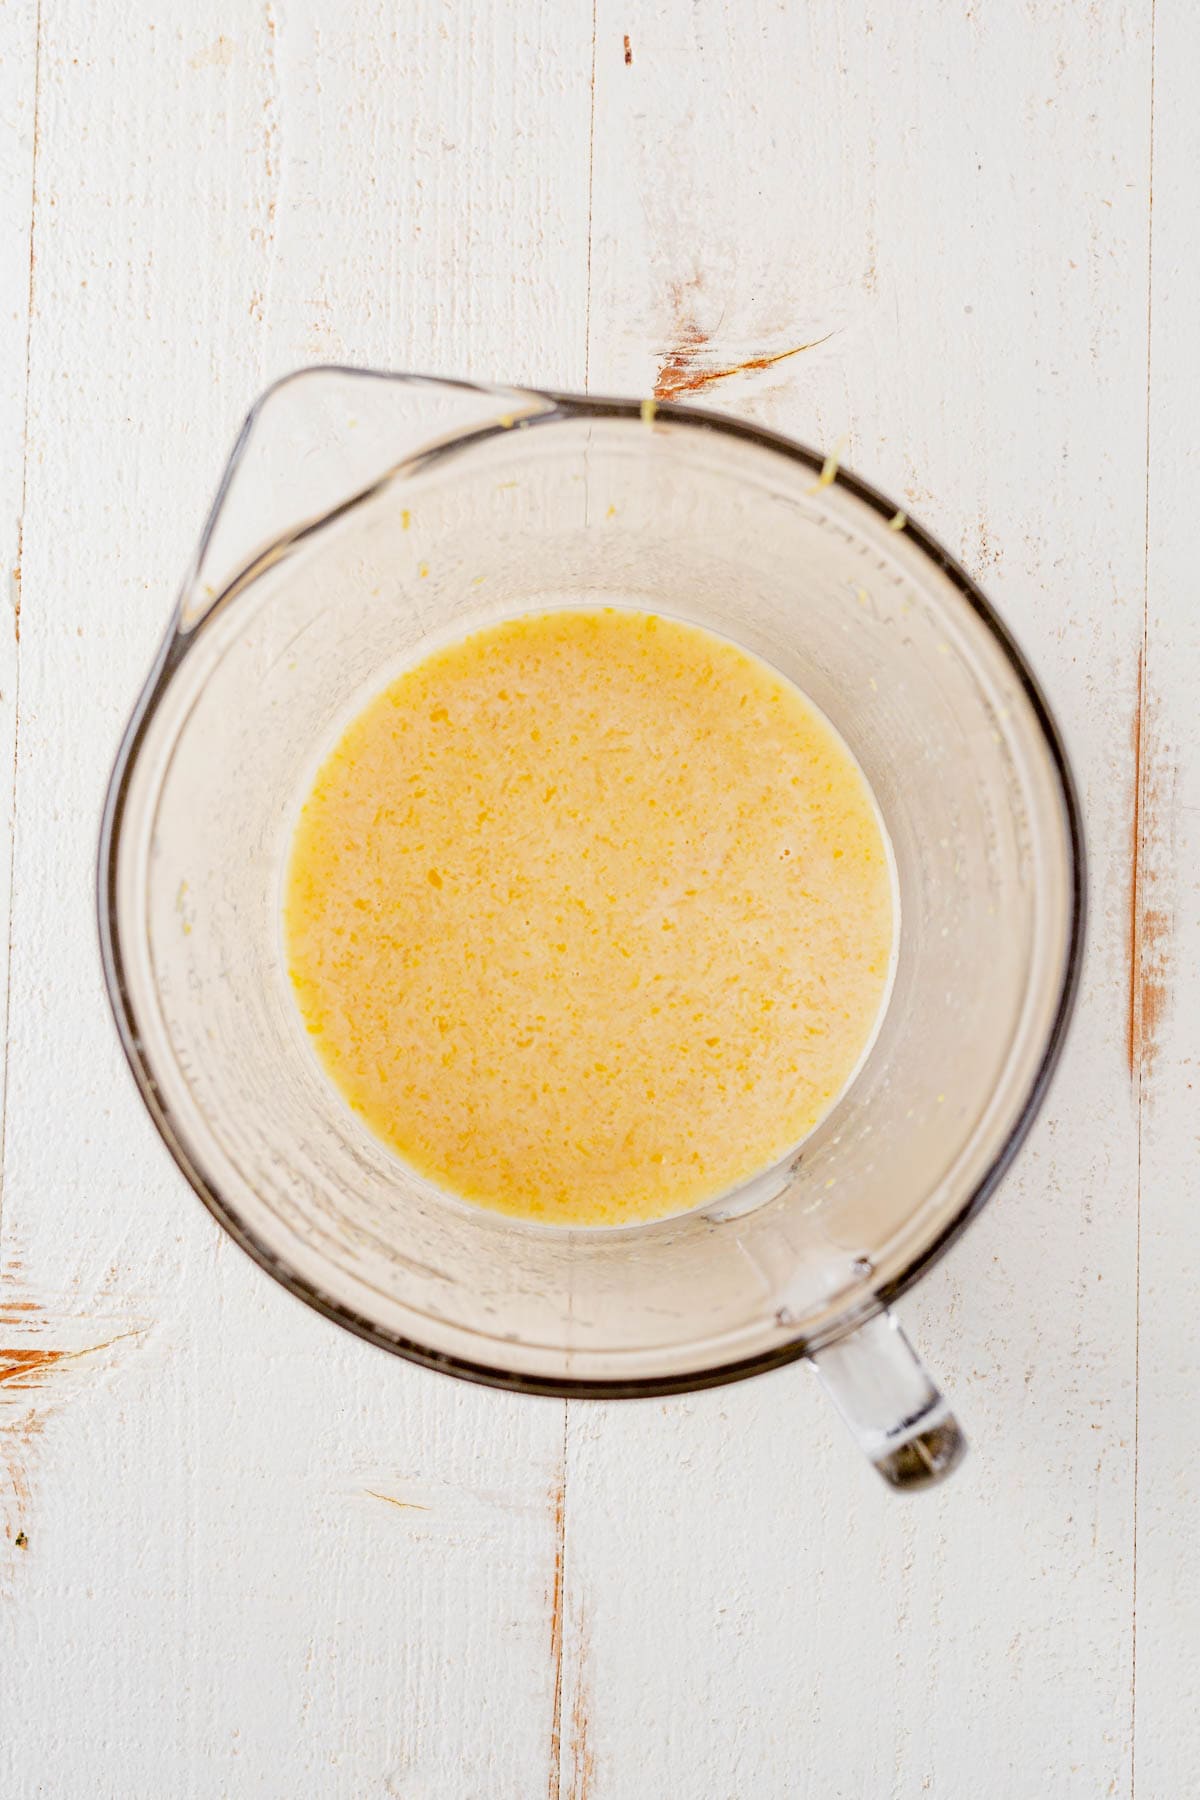 lemon juice, eggs, milk, and vanilla in a mixing bowl